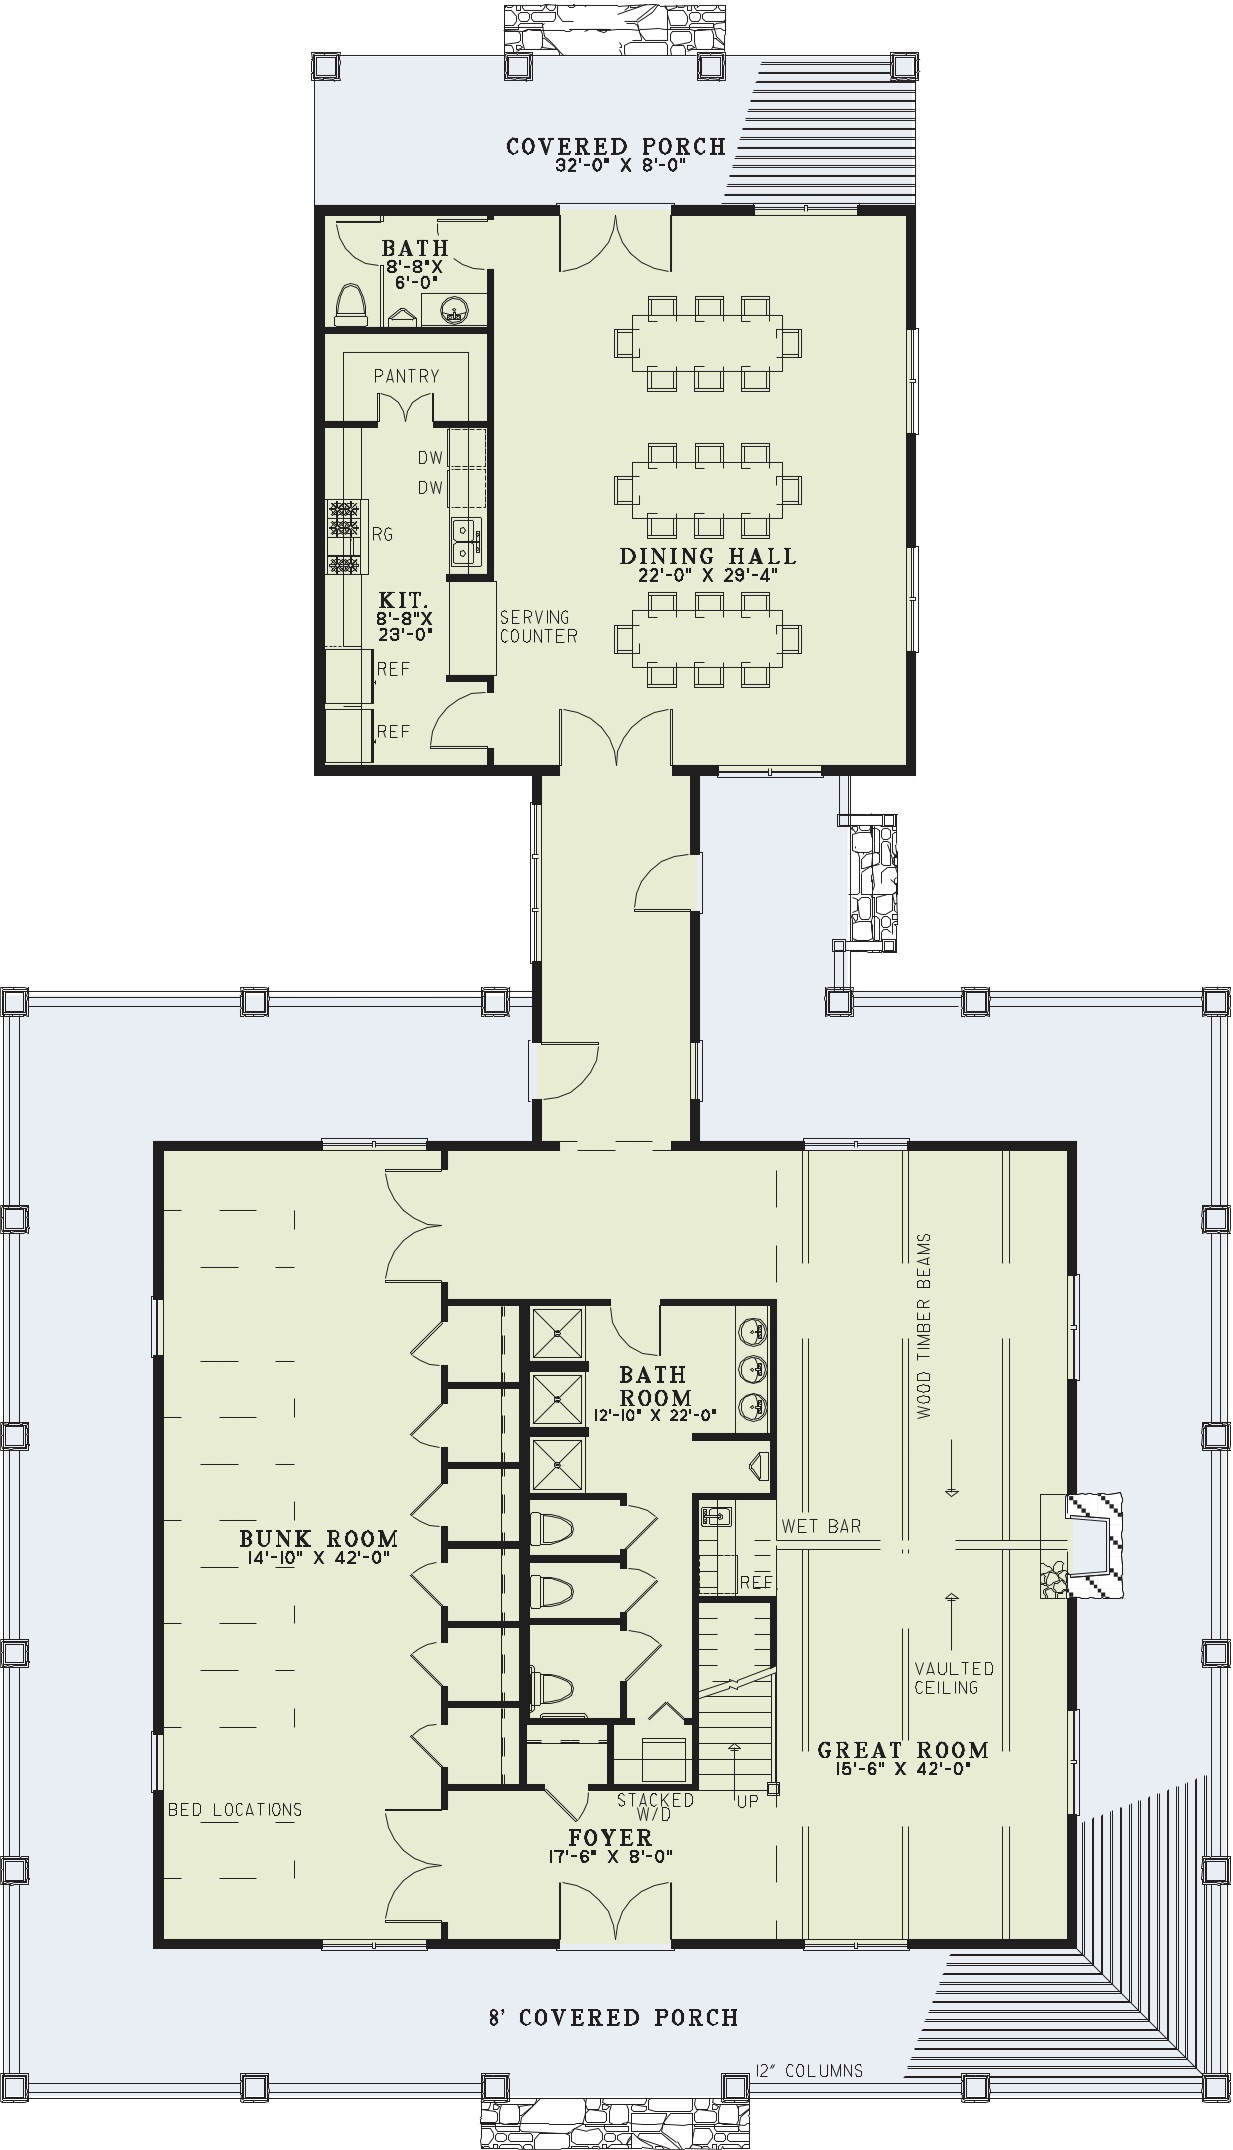 House Plan NDG 1130 Main Floor